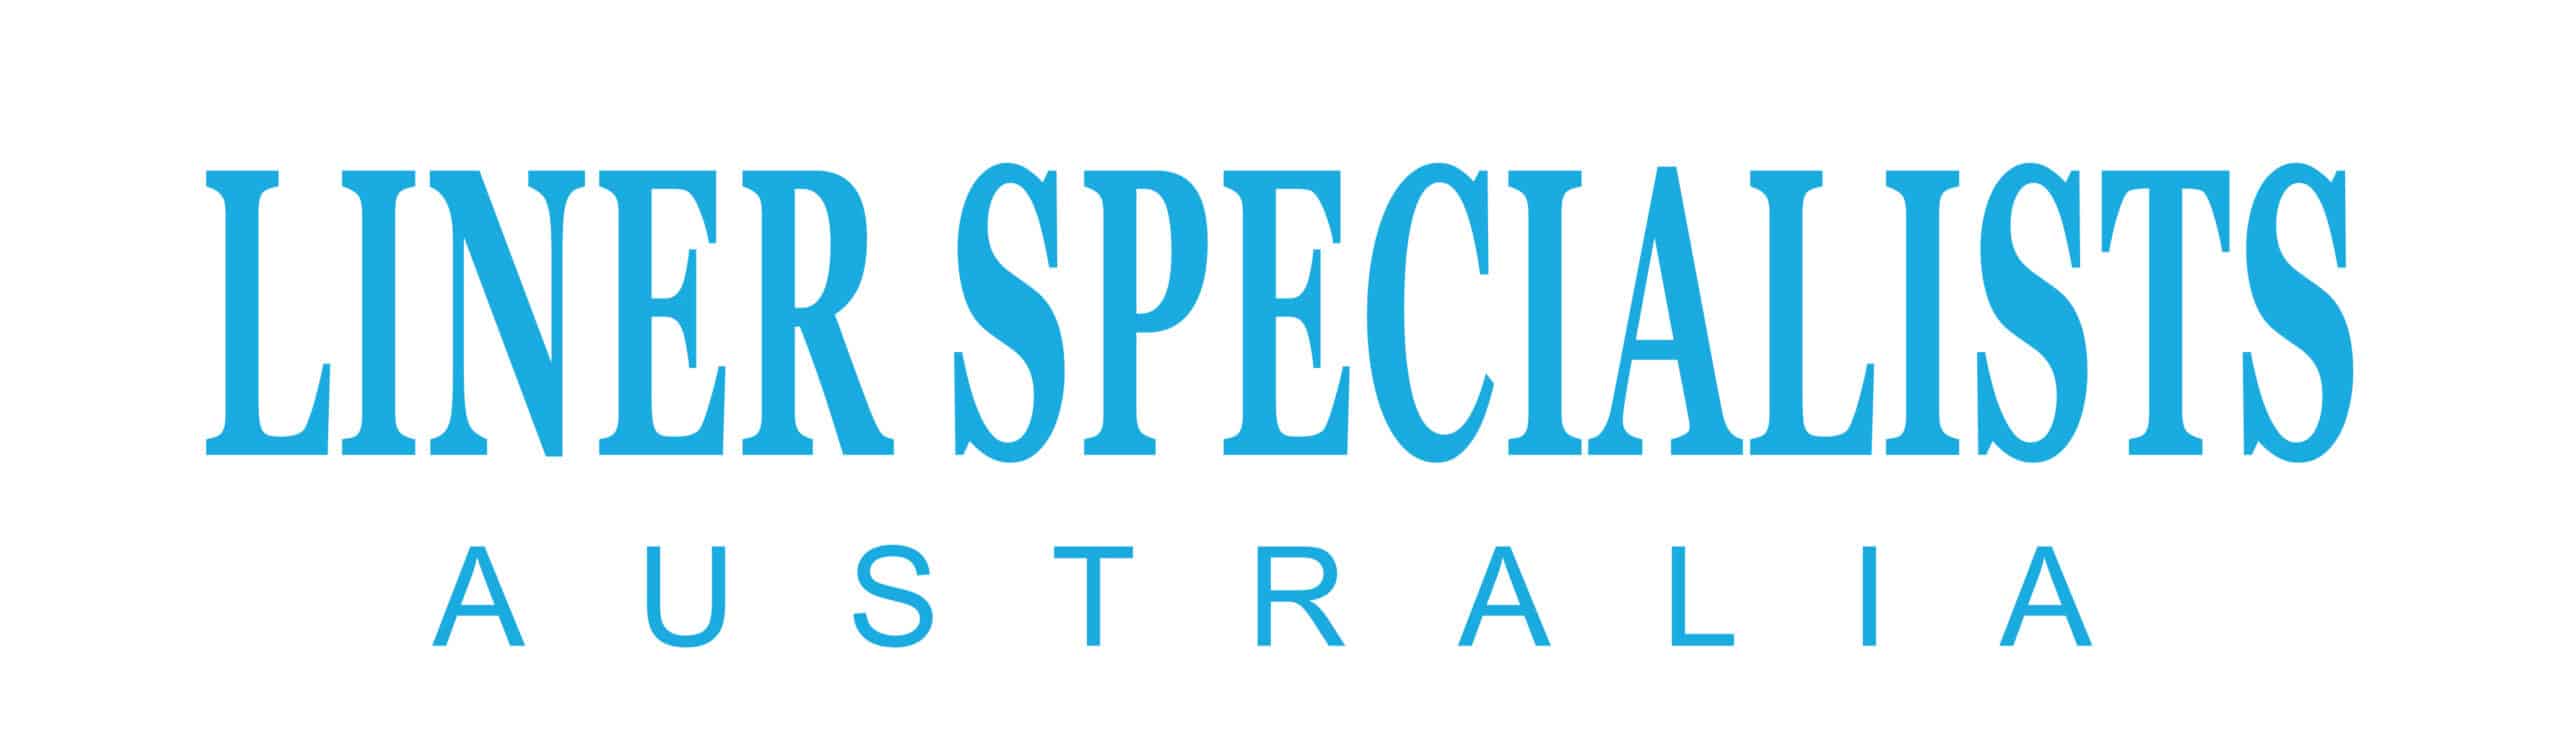 Liner Specialists Australia logo